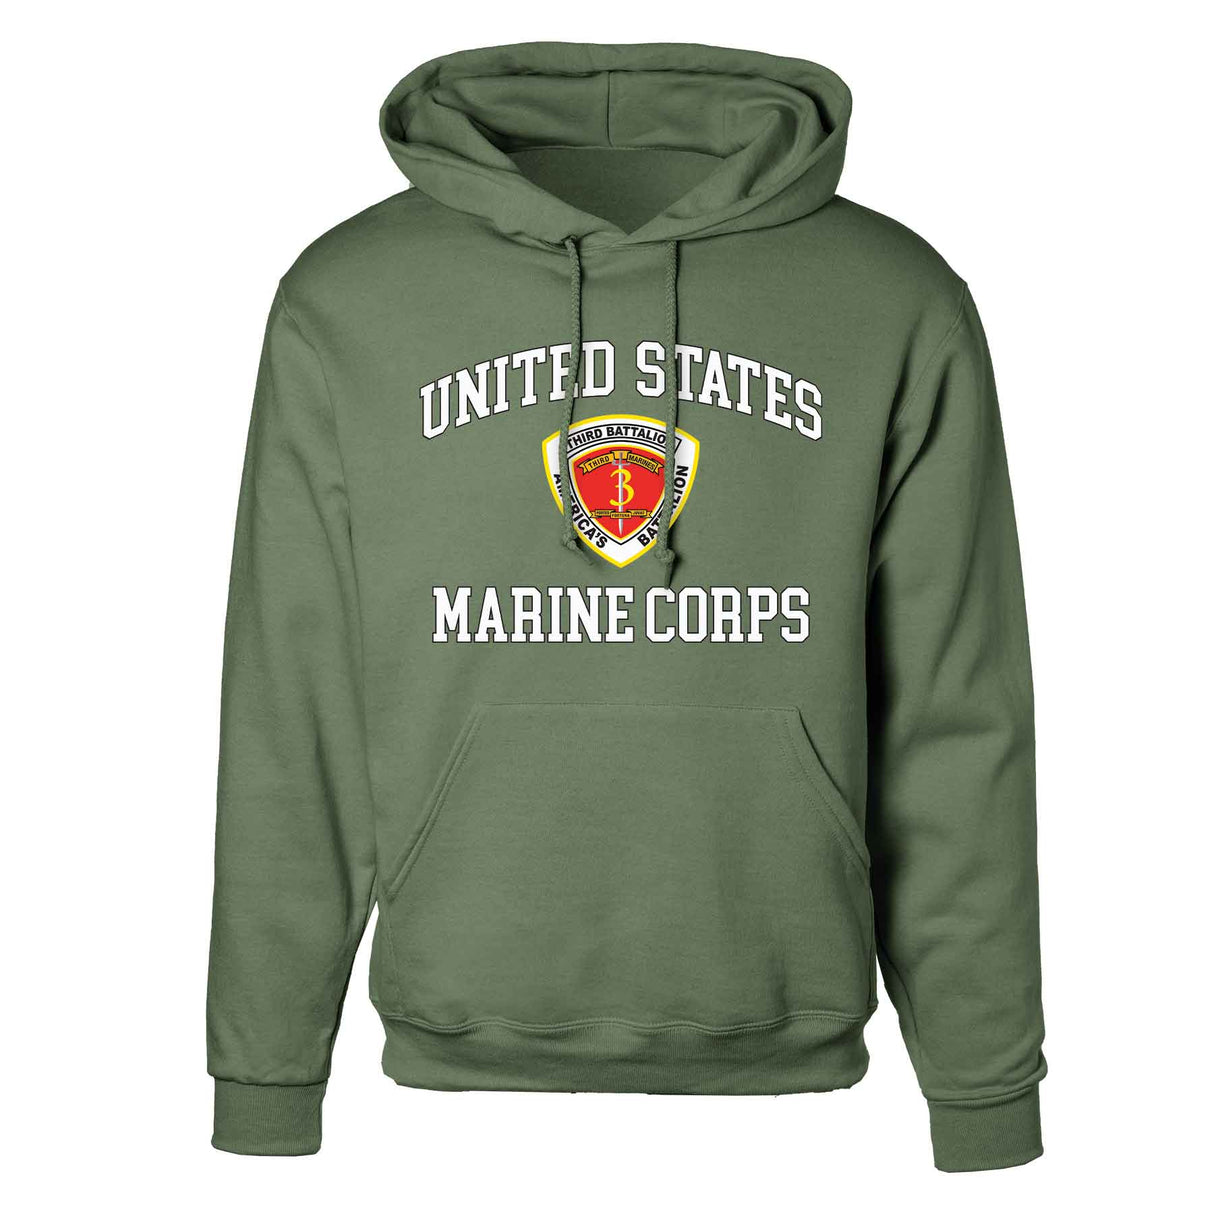 3rd Battalion 3rd Marines USMC Hoodie - SGT GRIT